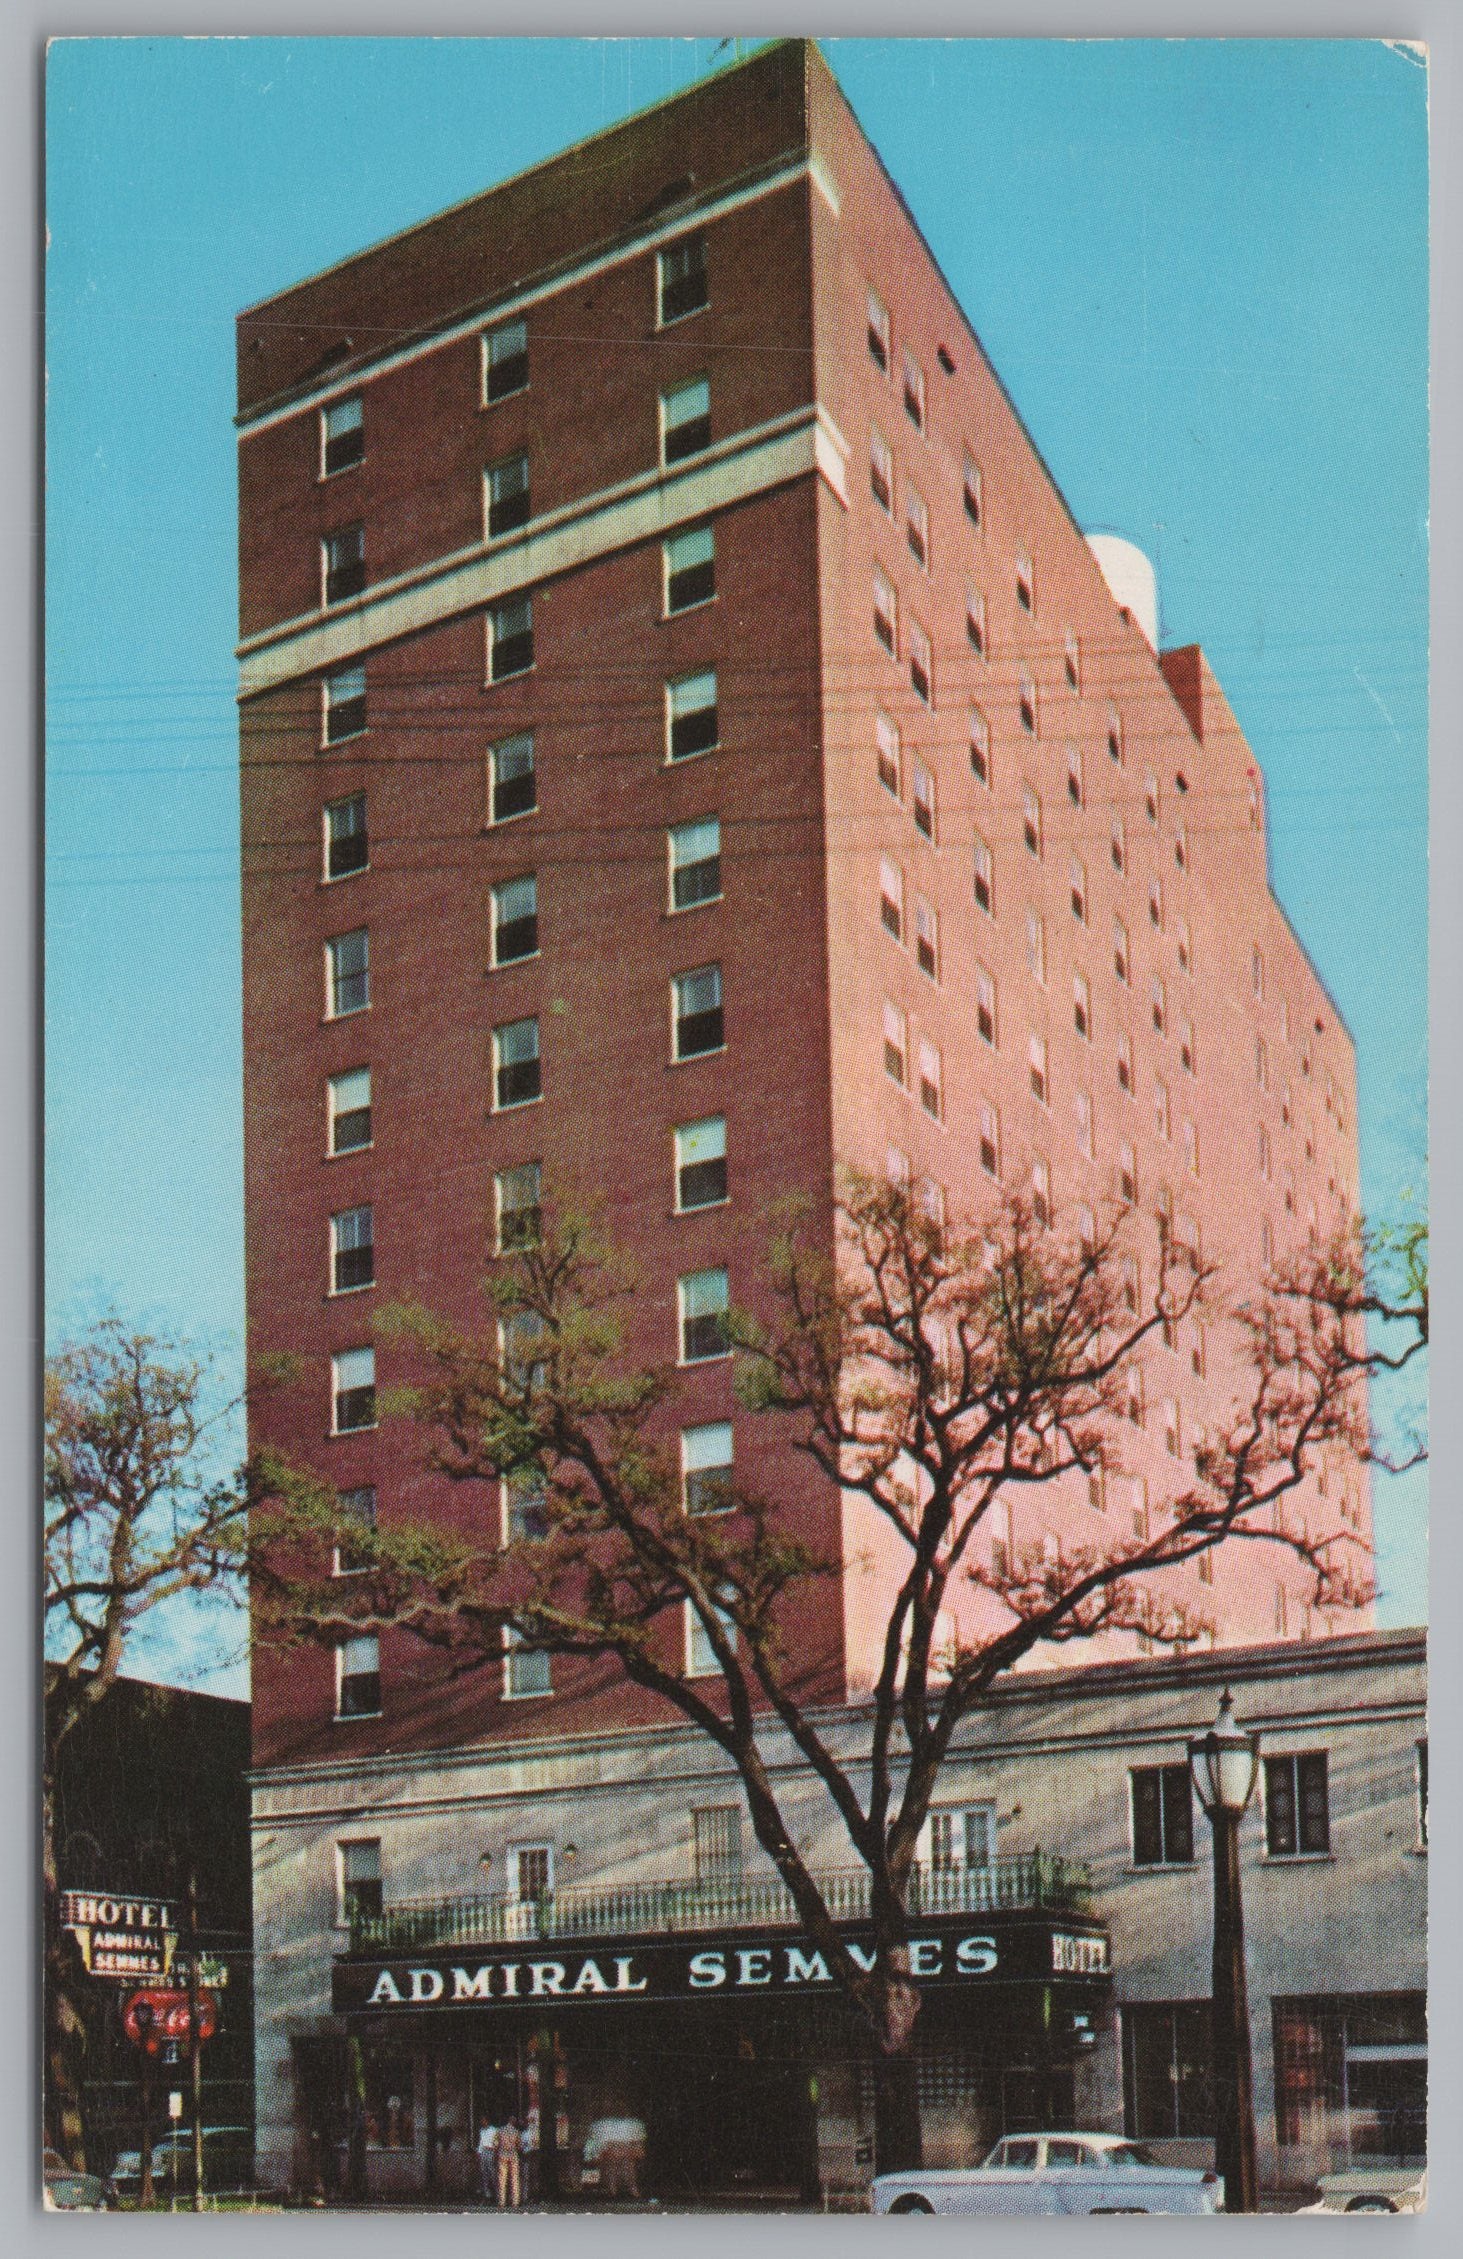 Hotel Admiral Simmes, Mobile, Alabama, Vintage Post Card.